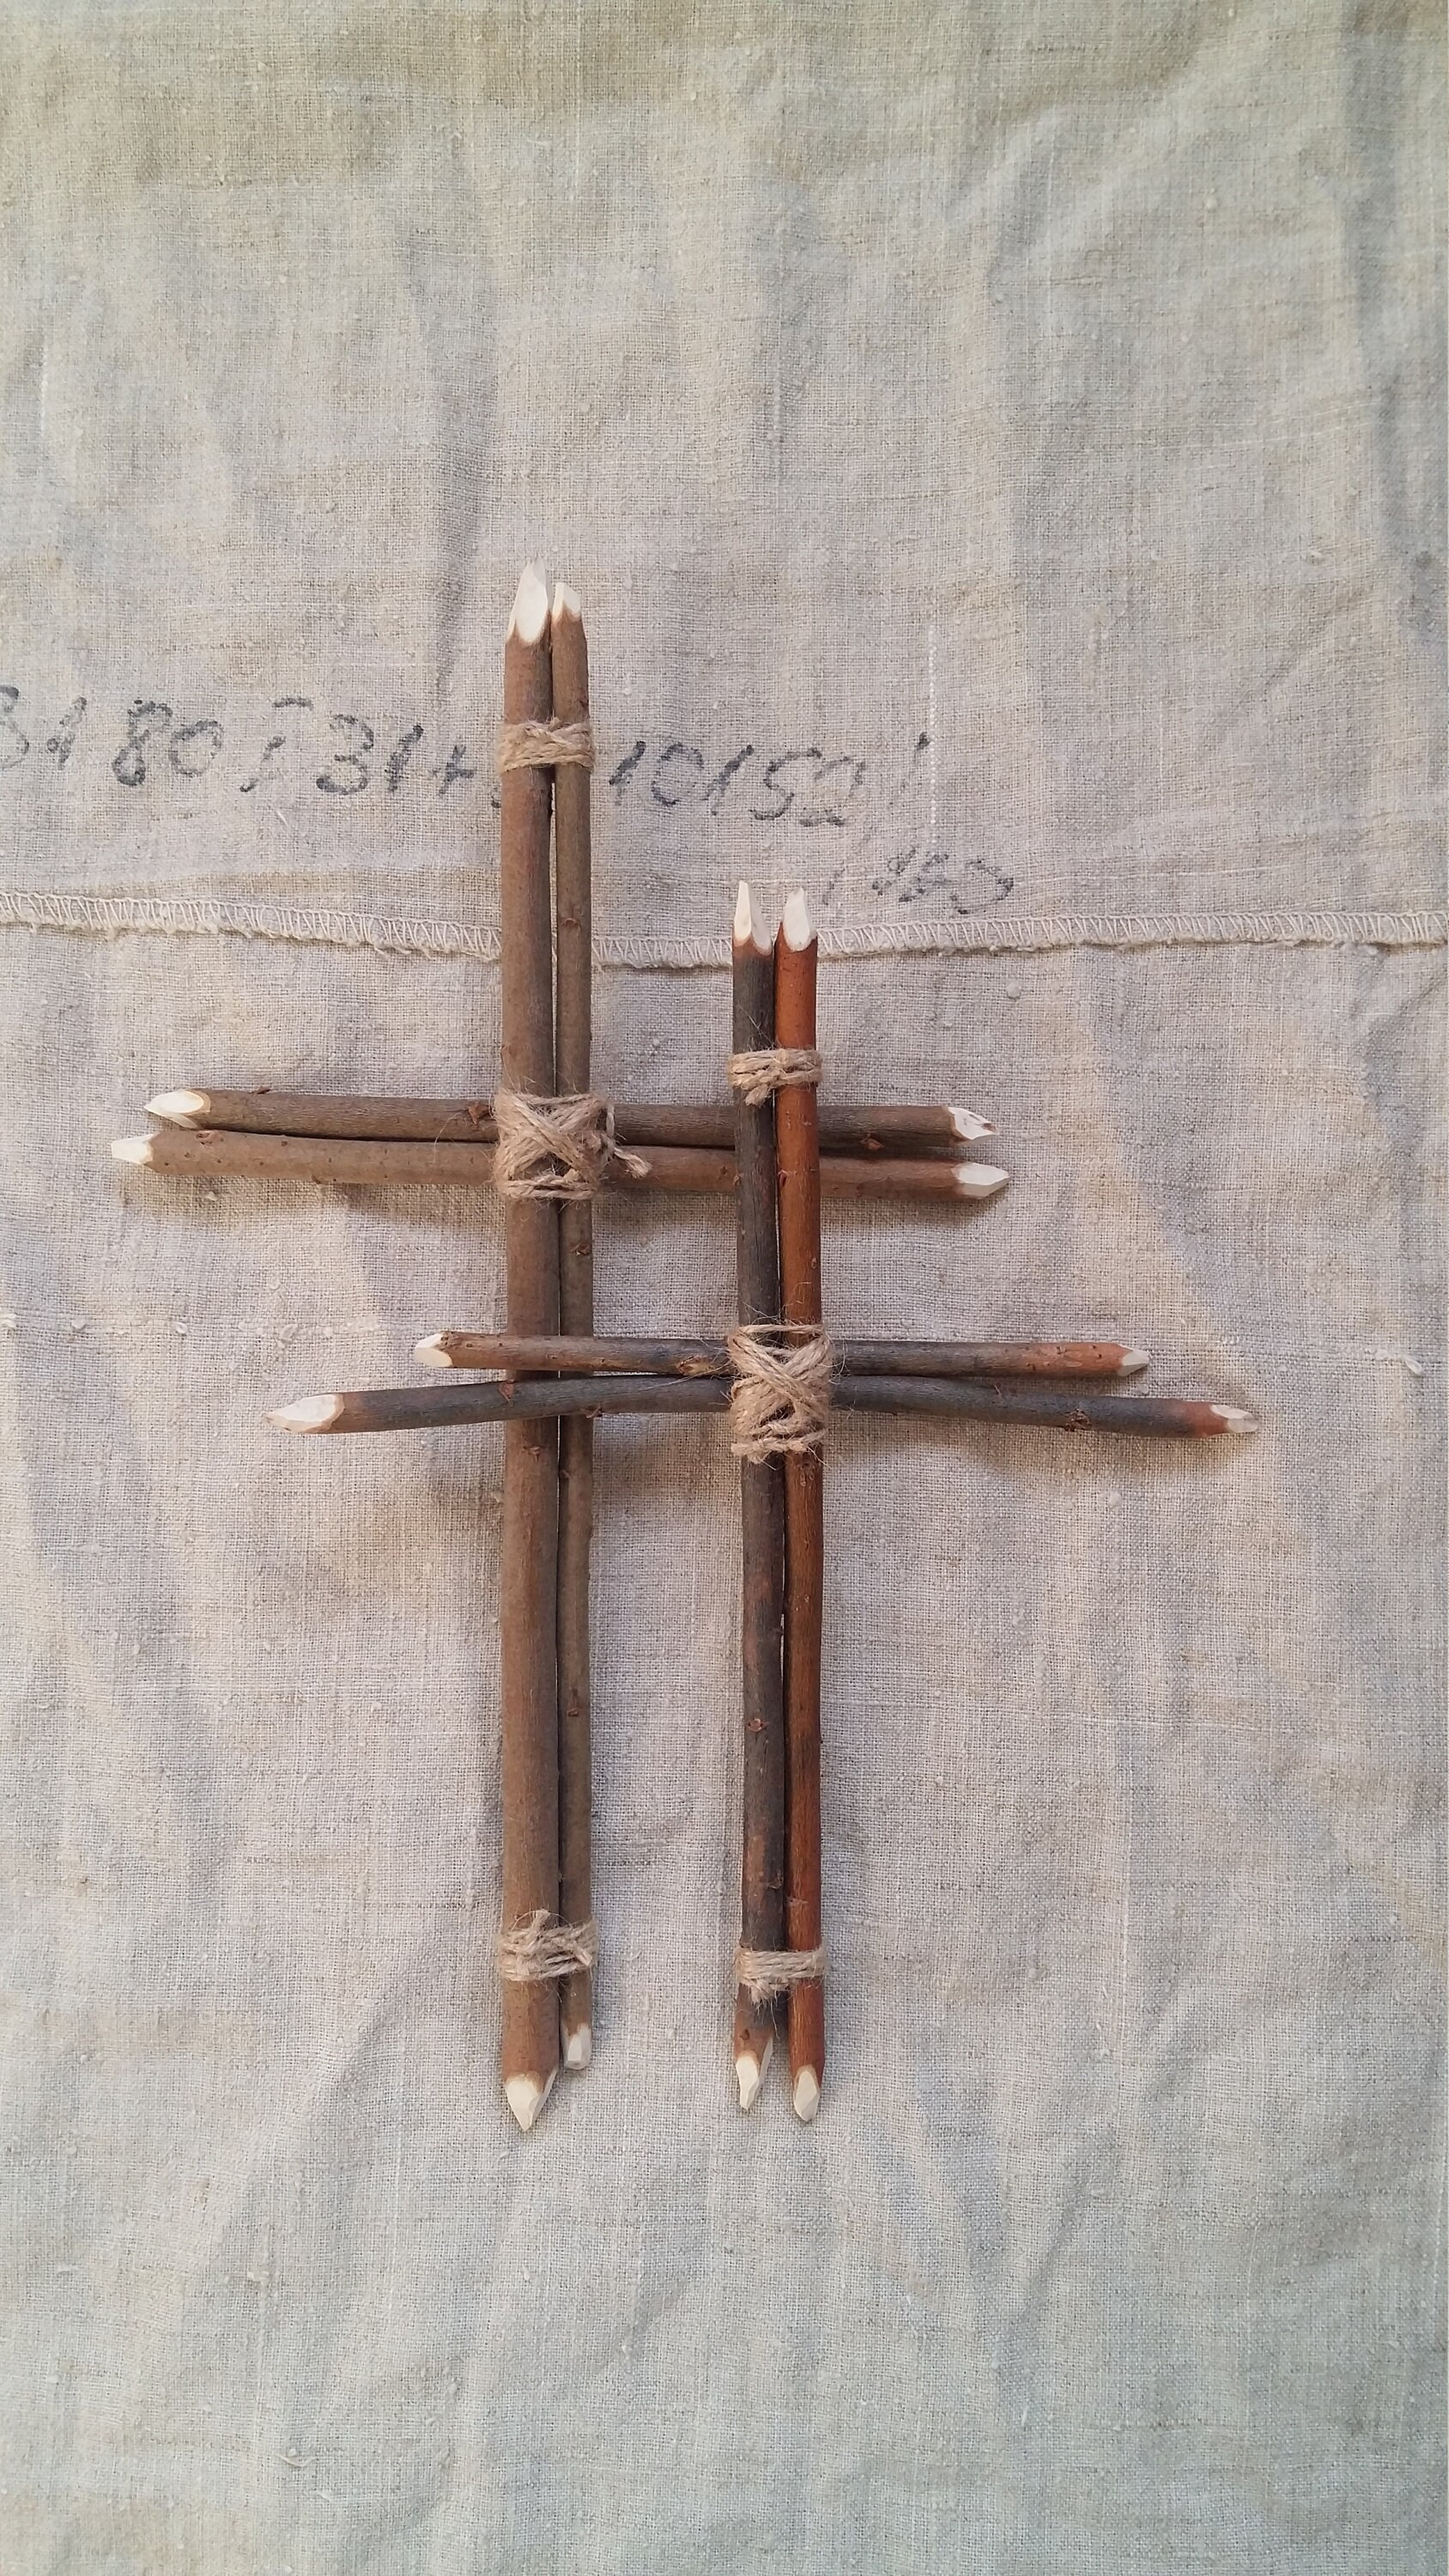 Cruz de madera foto de archivo. Imagen de pascua, salvador - 42186684